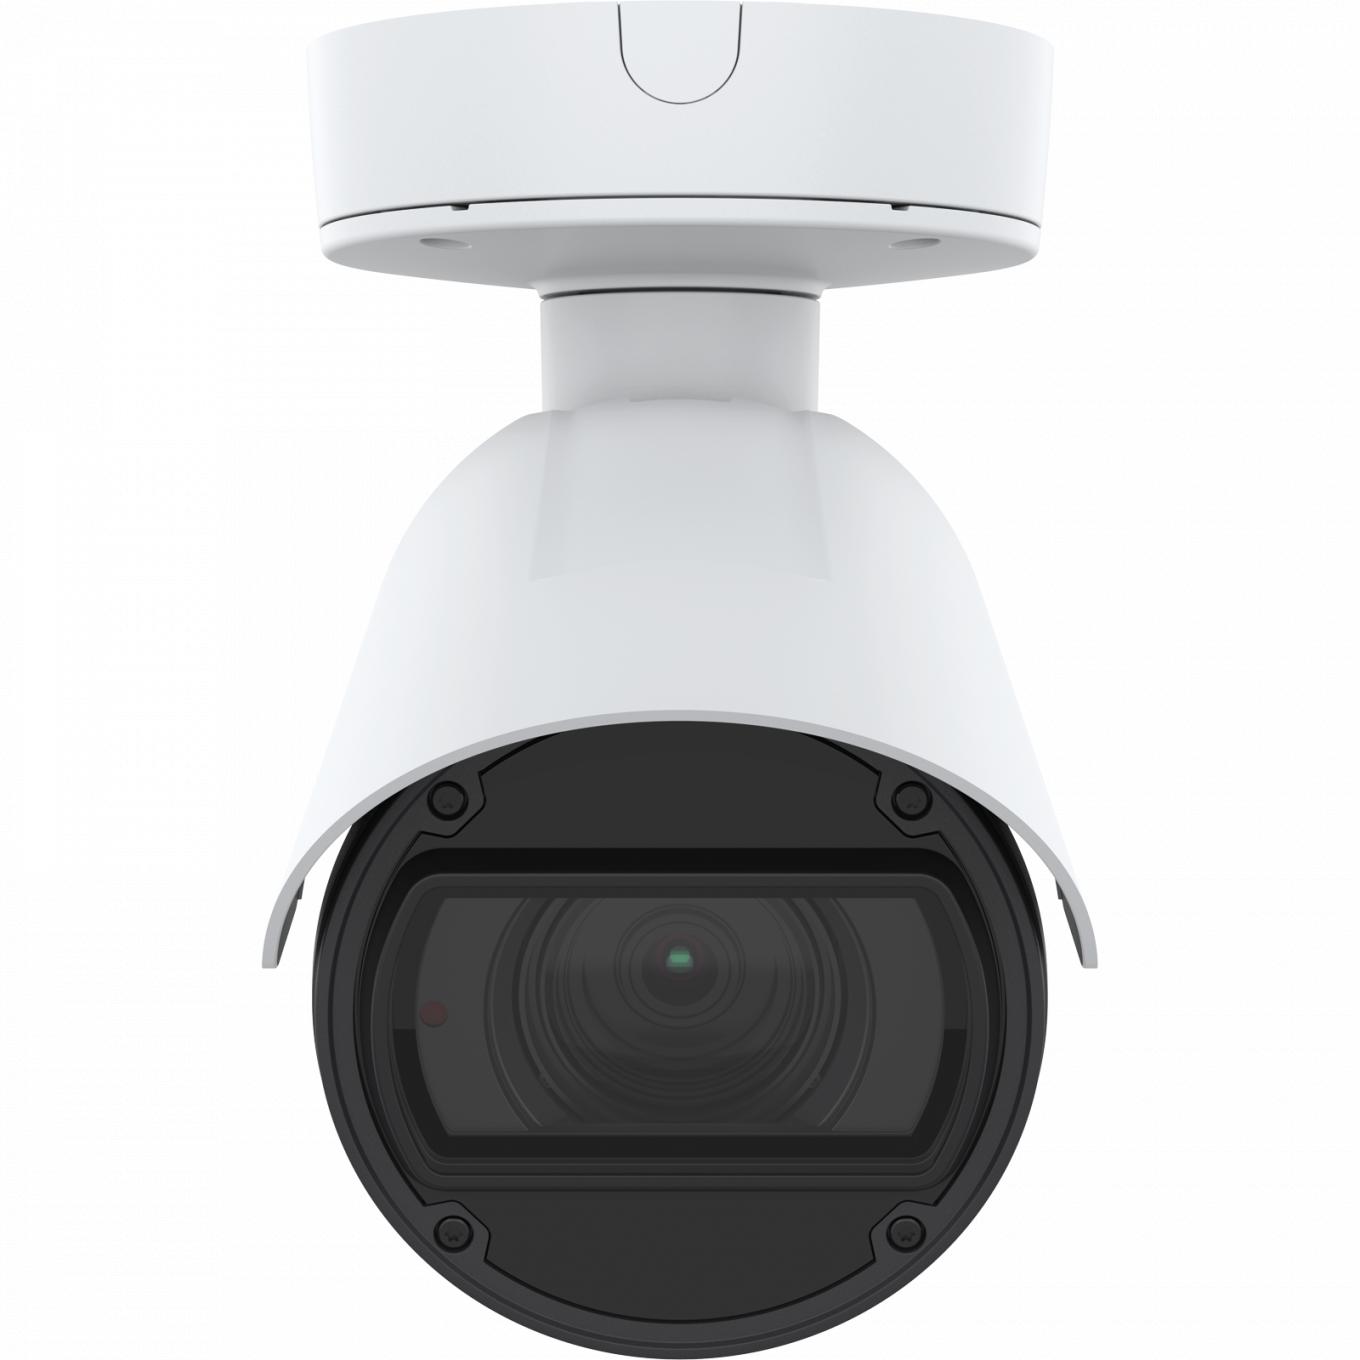 AXIS Q1786-LE IP Cameraには、OptimizedIRが搭載されています。 製品を正面から見たところです。 